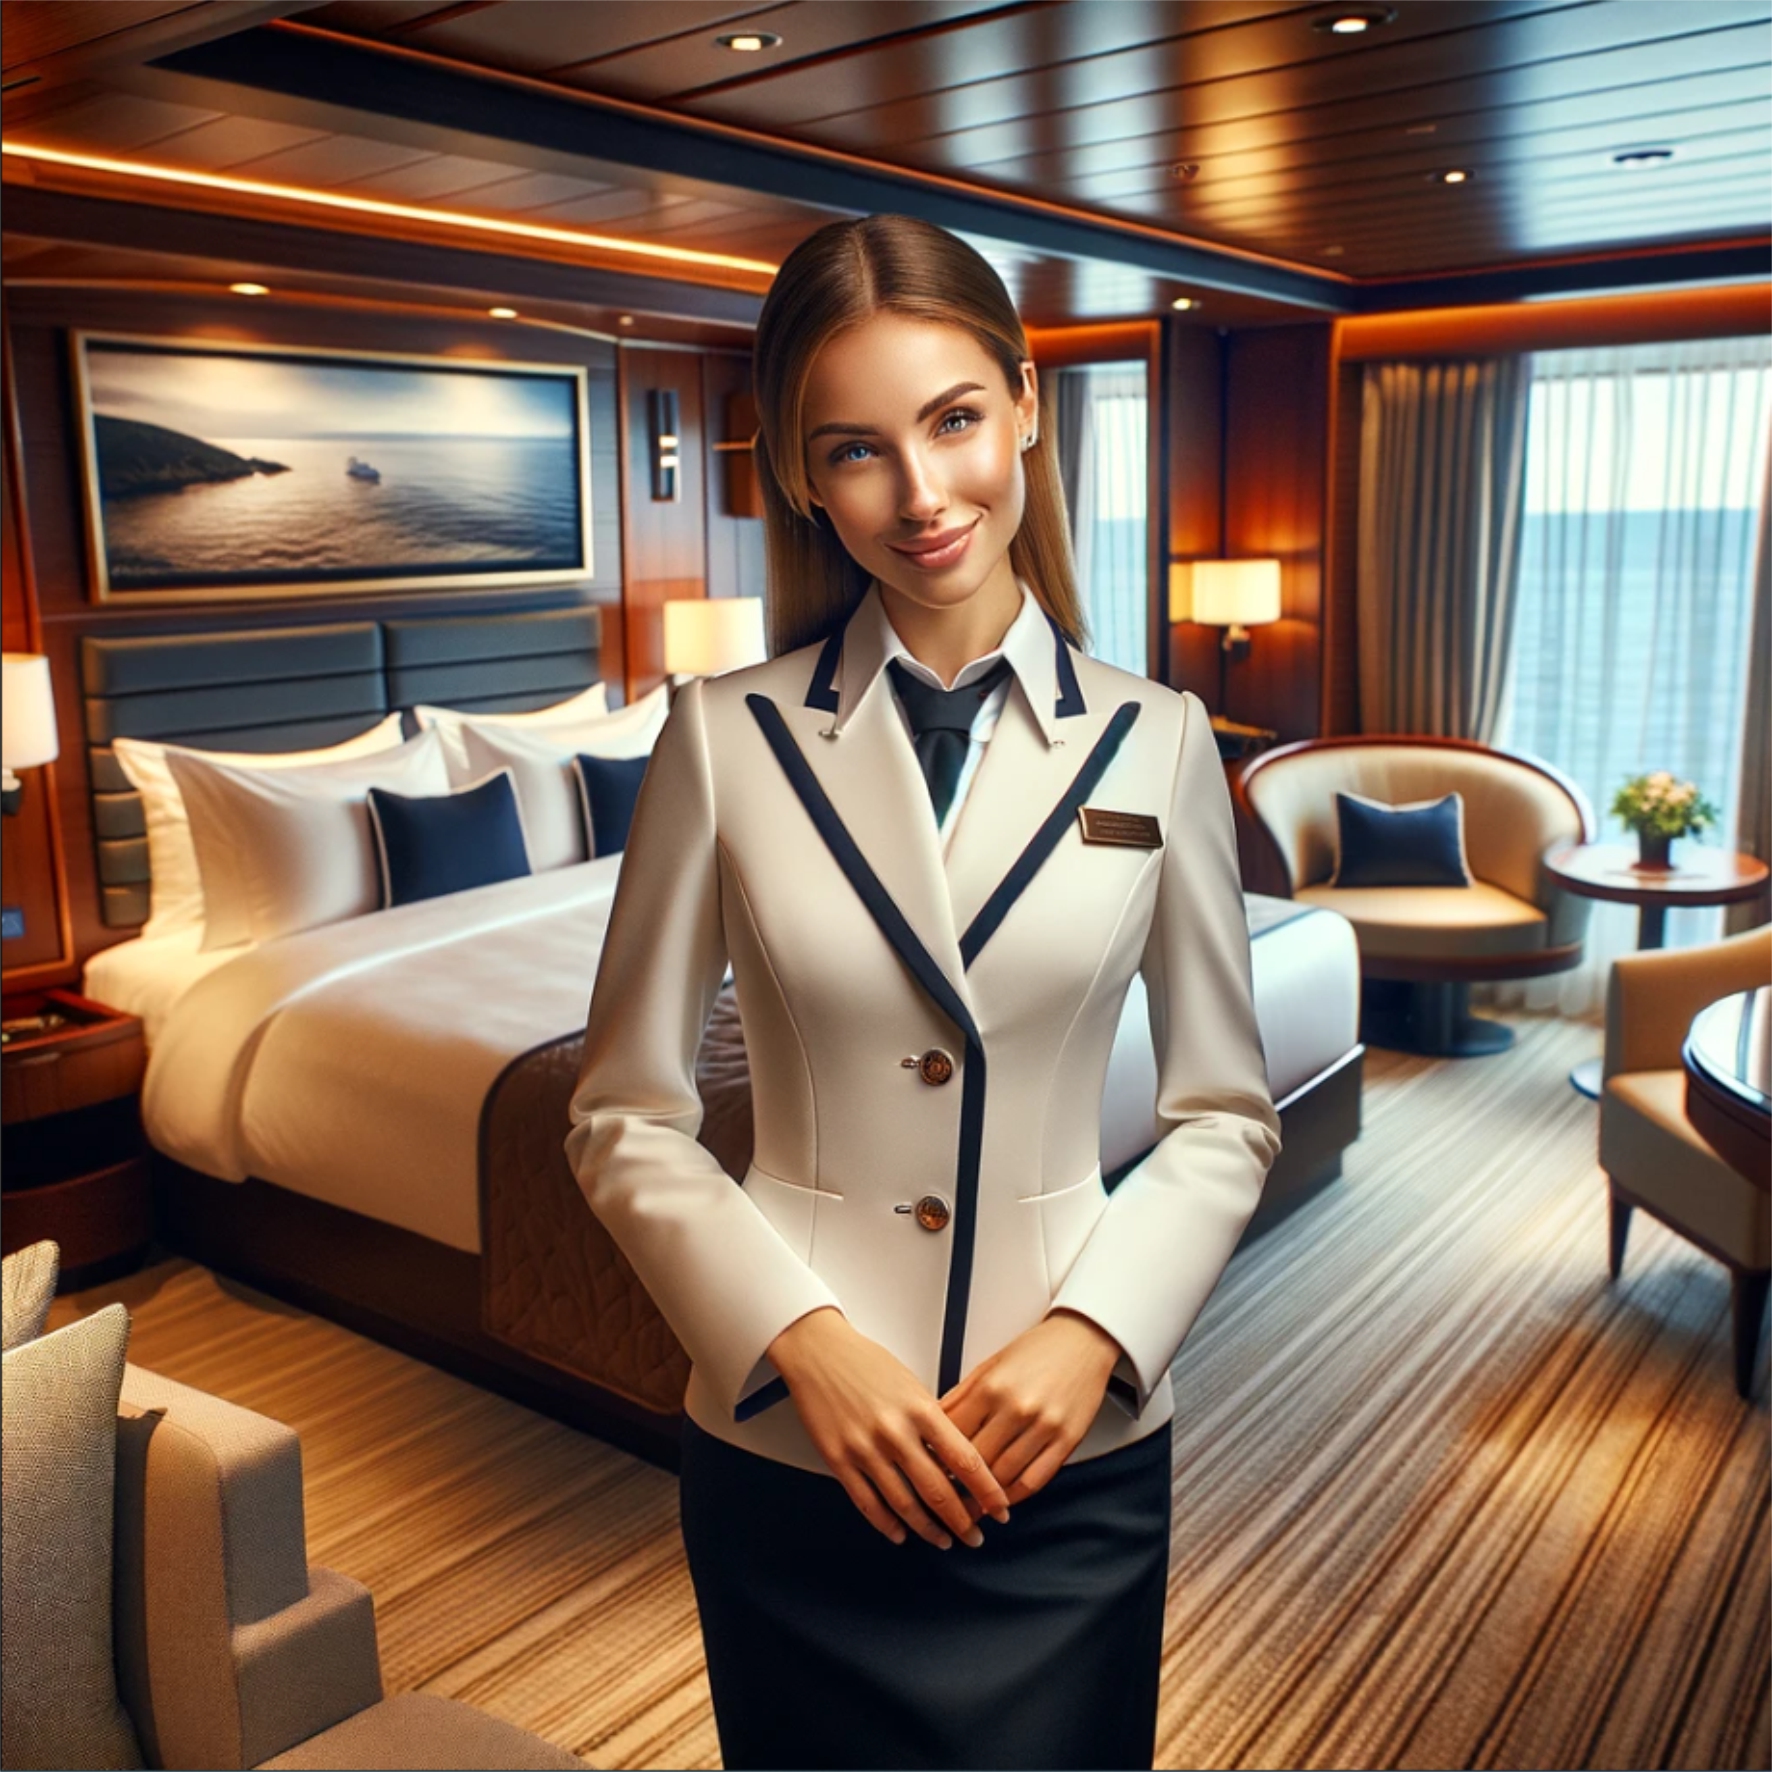 Cabin Stewardess (Cruise Vessel)